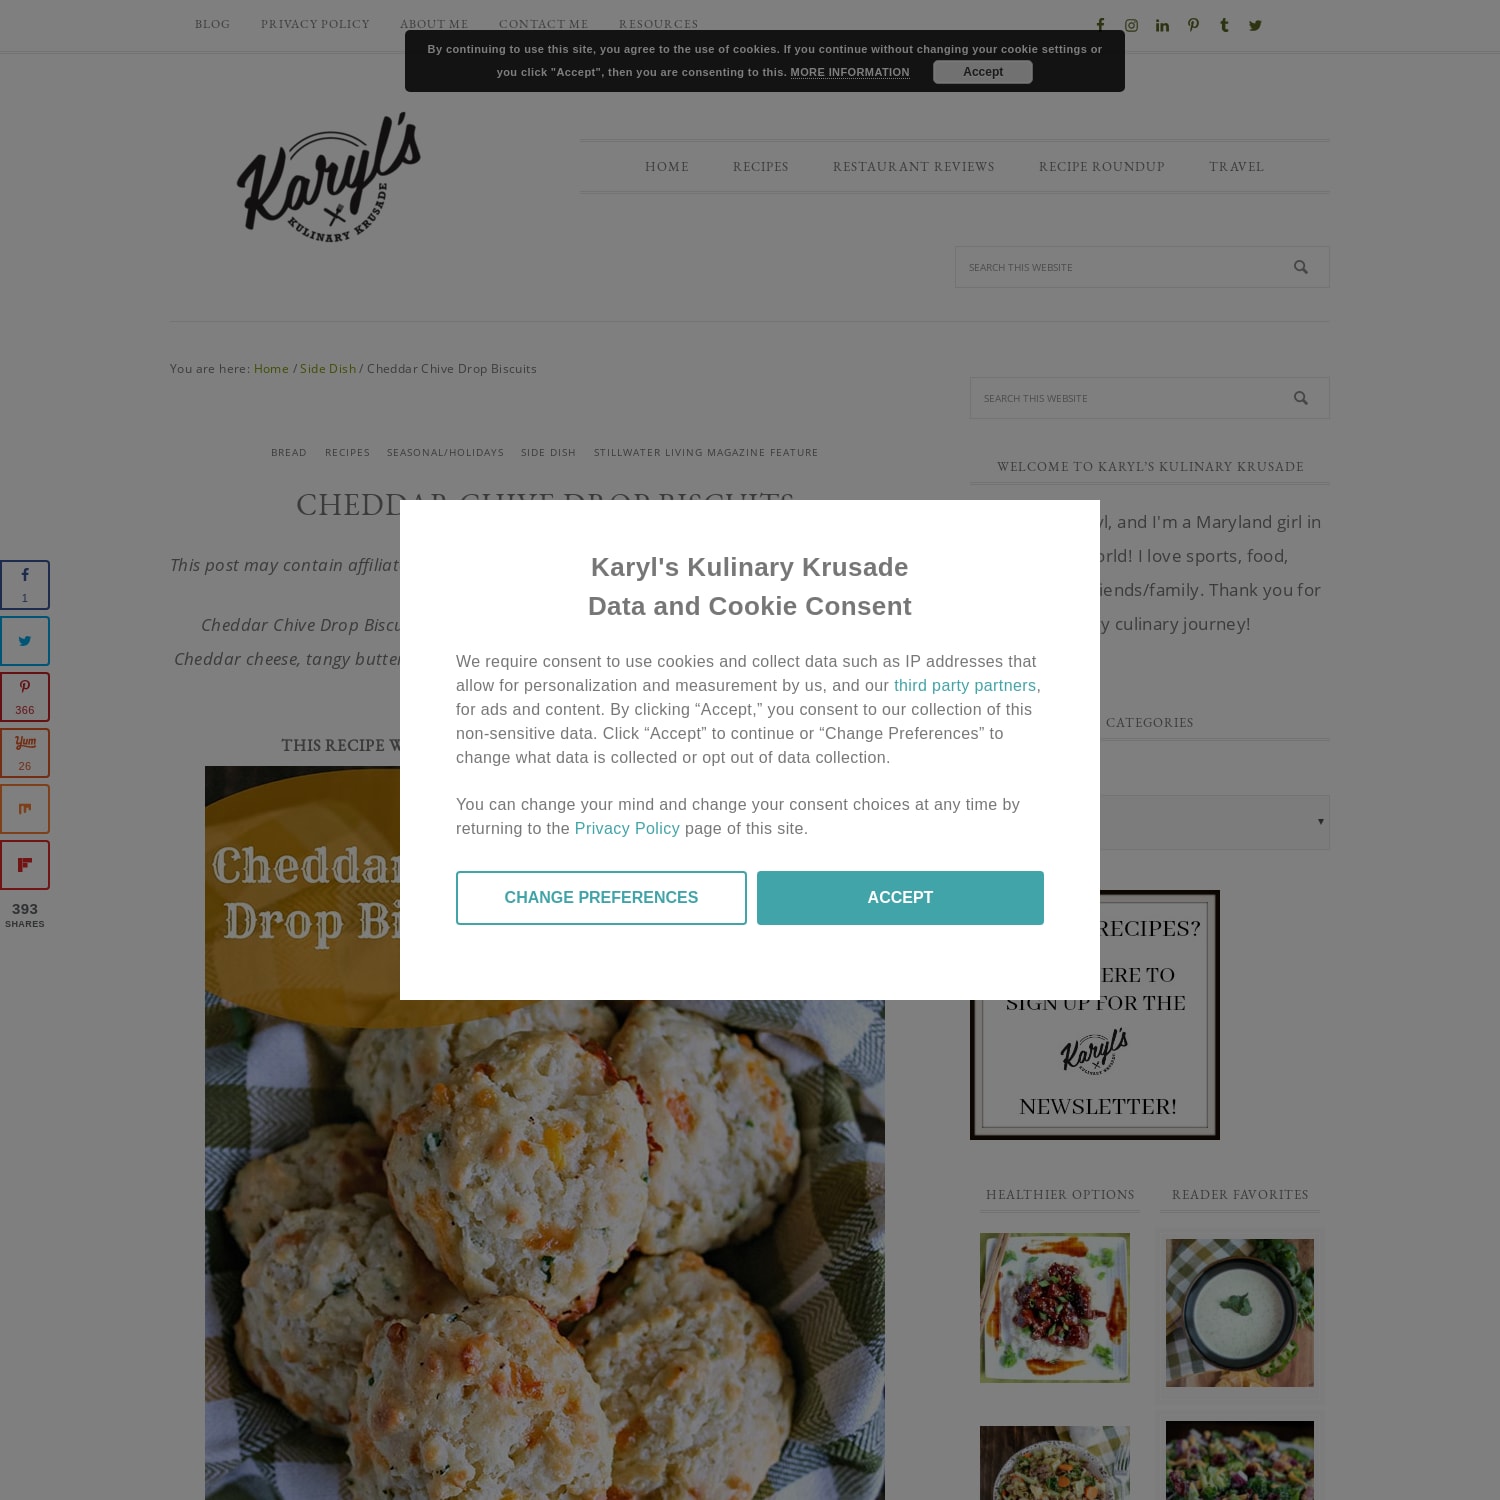 Cheddar Chive Drop Biscuits | Karyl's Kulinary Krusade